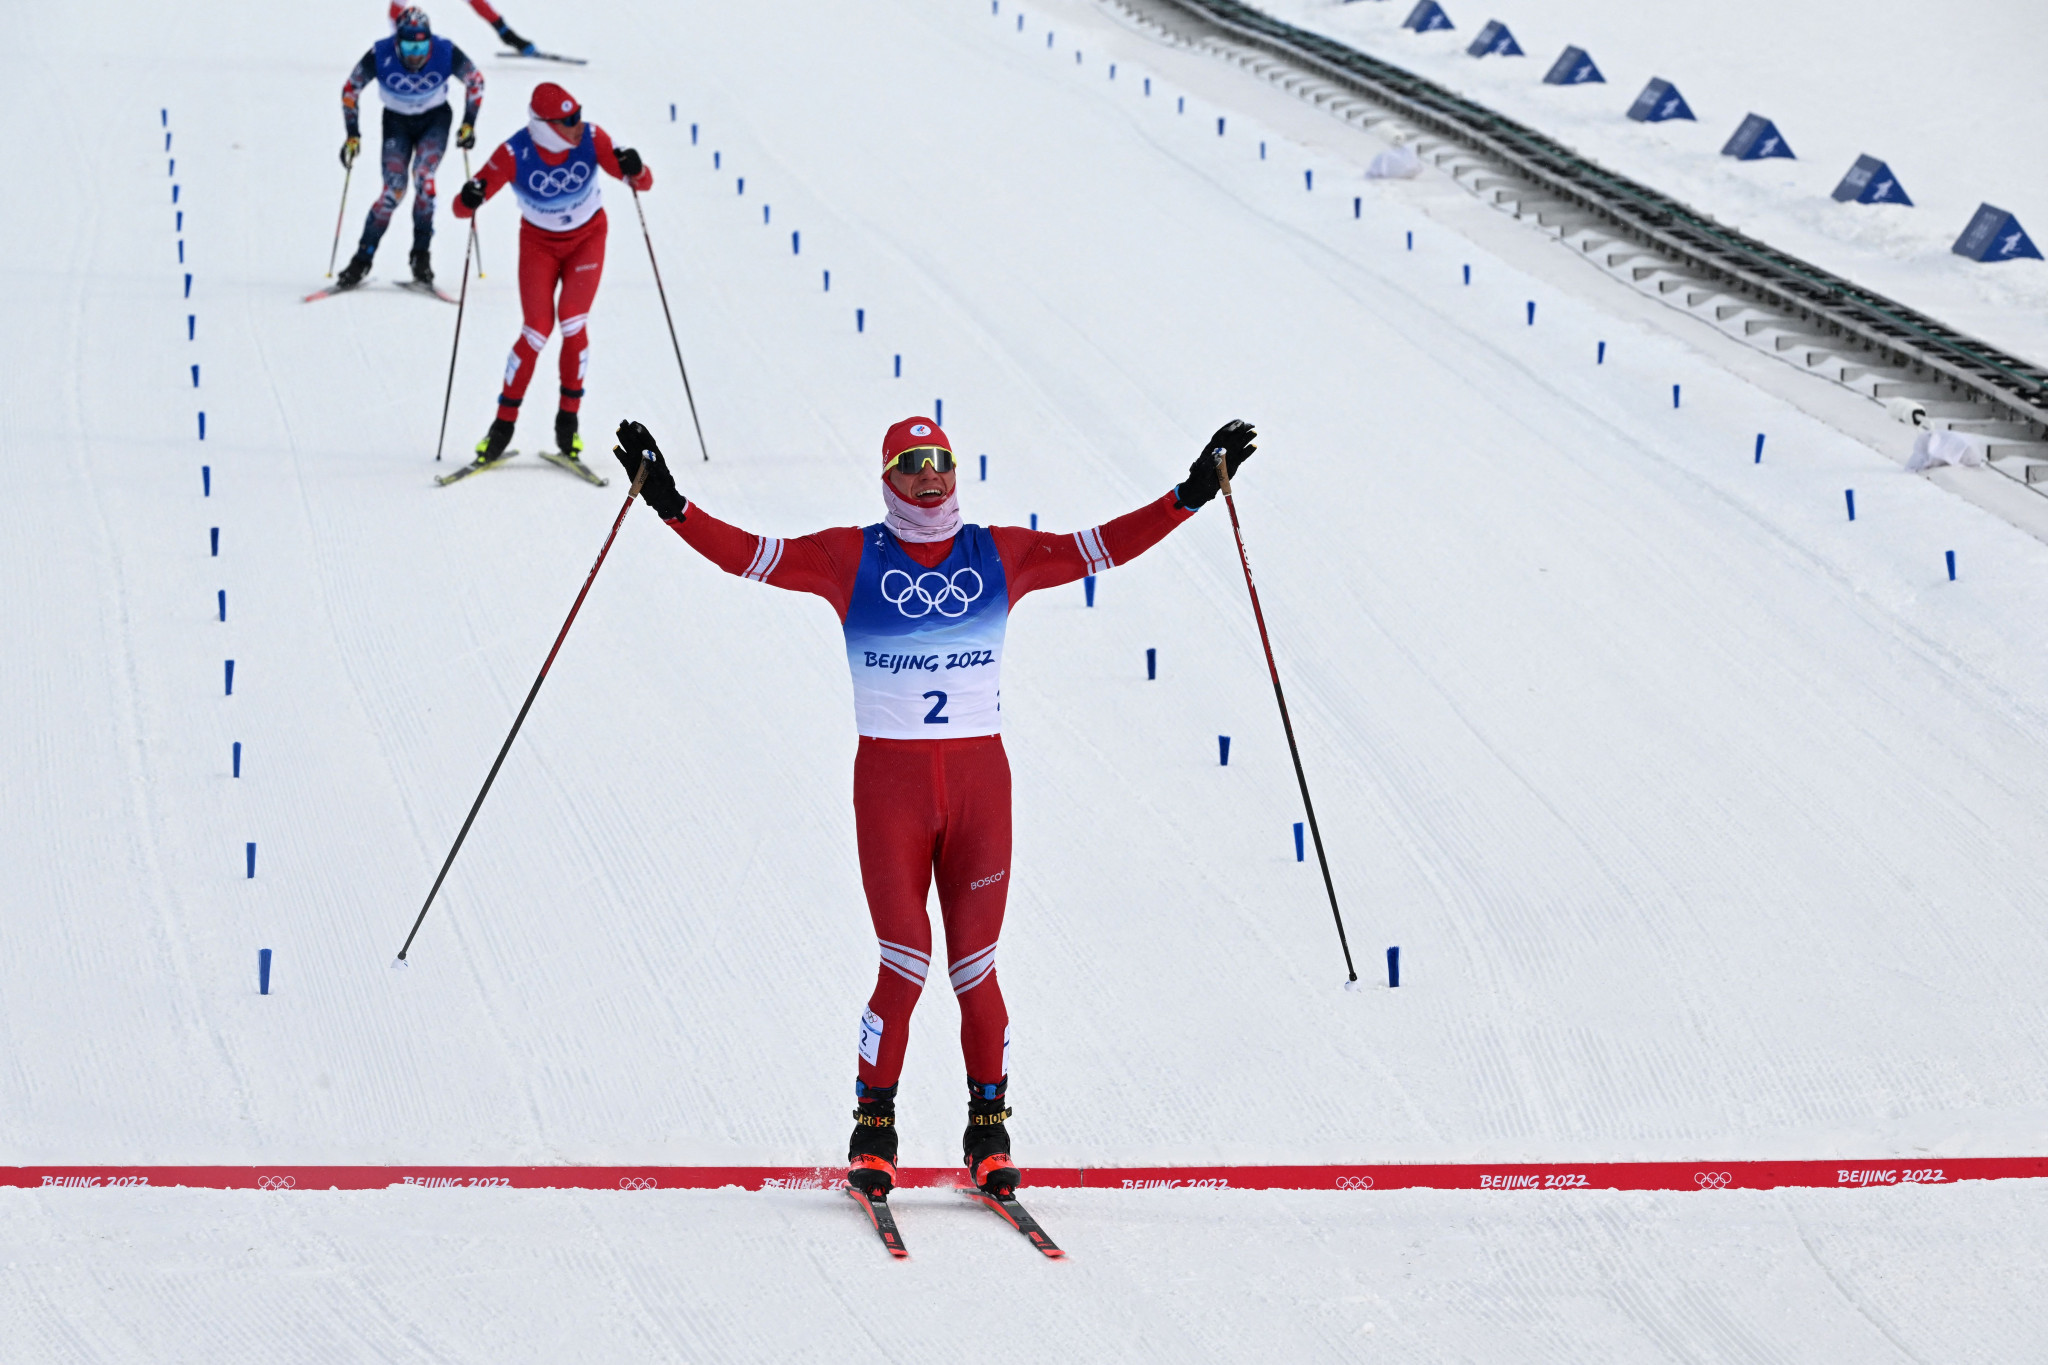 Alexander Bolshunov earned his third gold medal of Beijing 2022 ©Getty Images